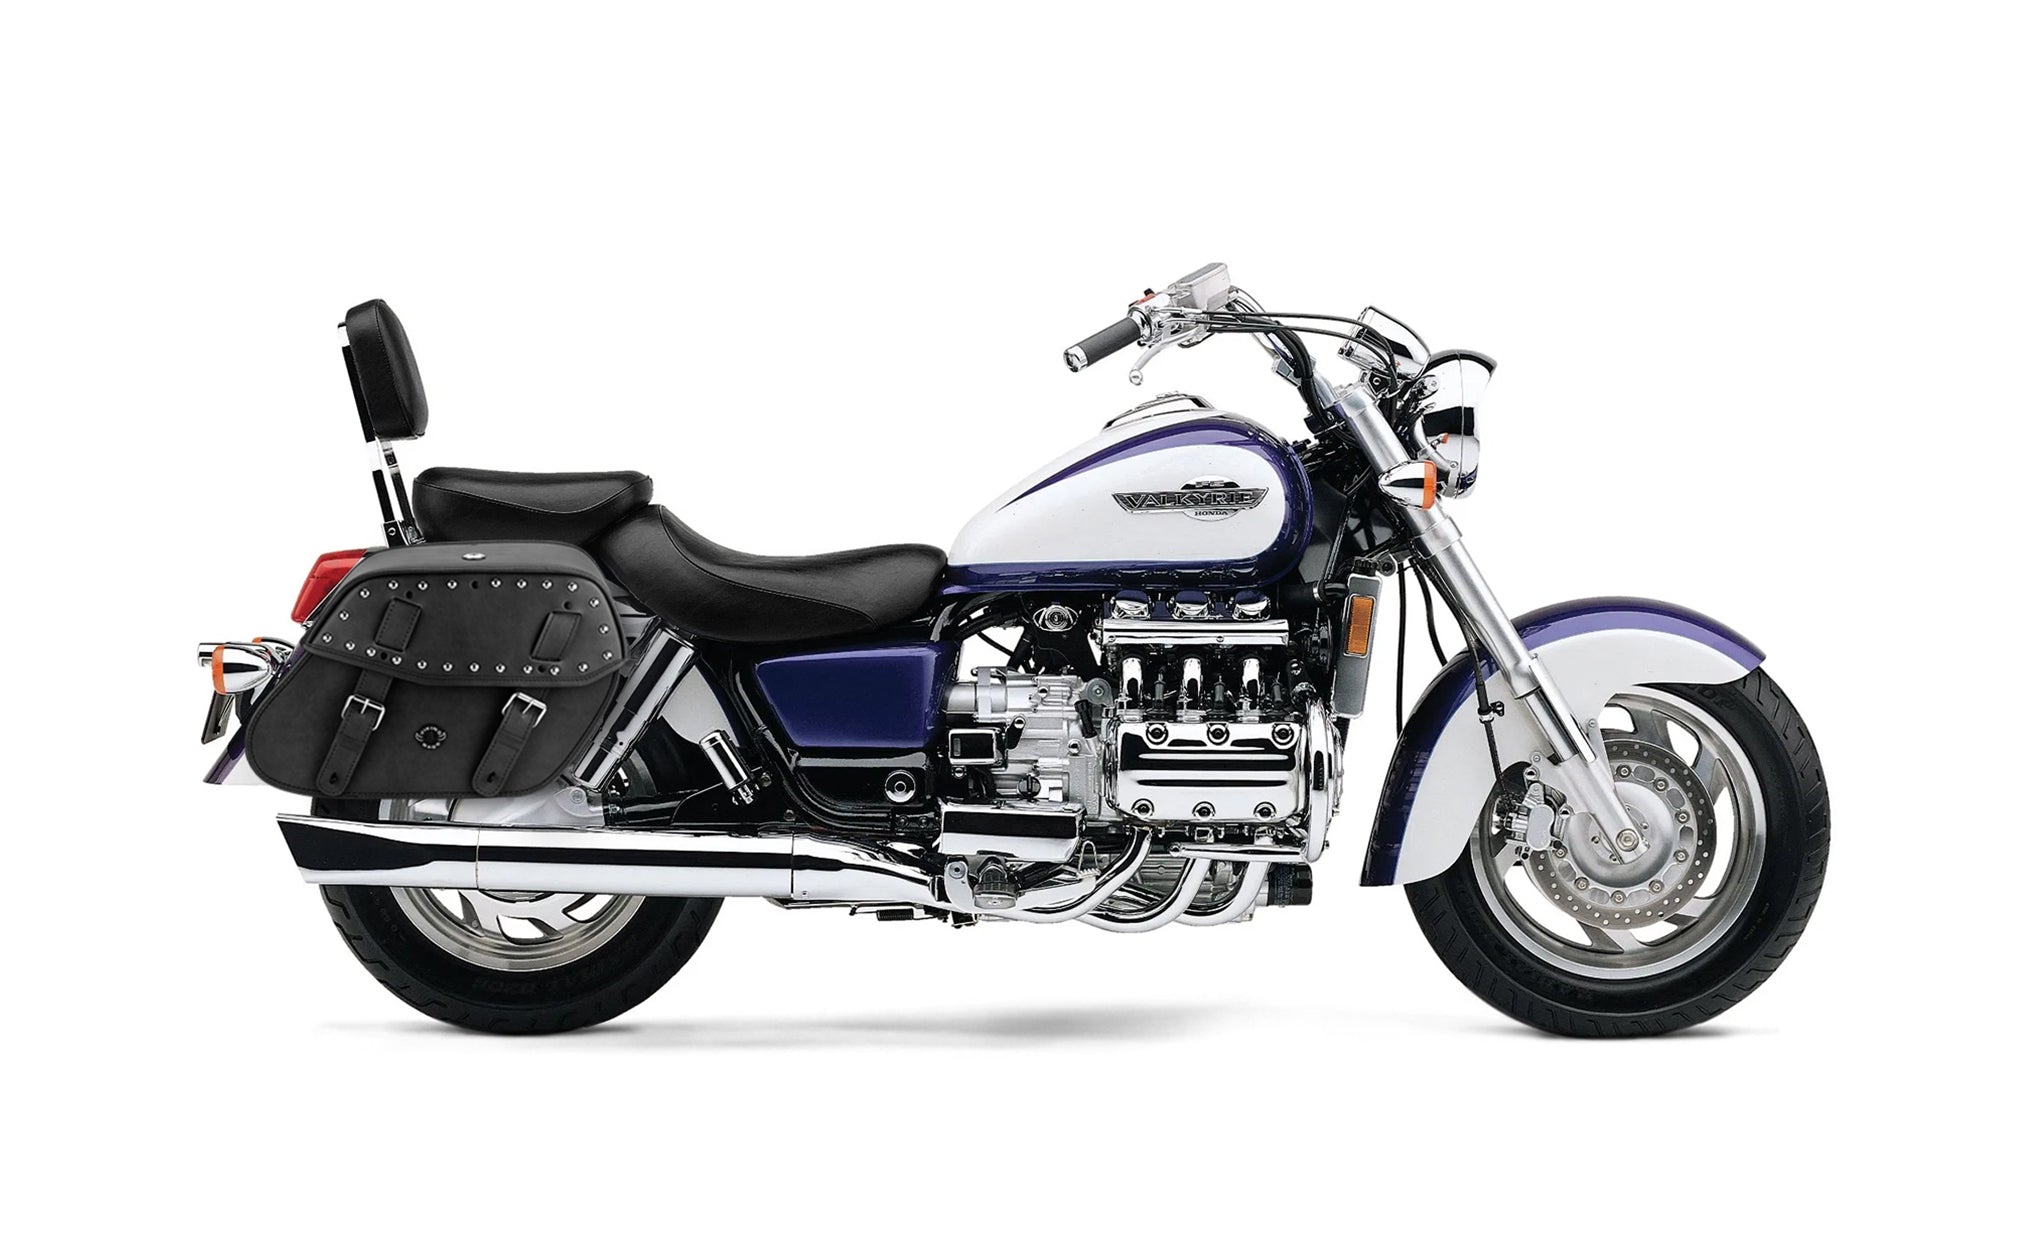 Viking Odin Large Honda Valkyrie 1500 Interstate Leather Studded Motorcycle Saddlebags on Bike Photo @expand